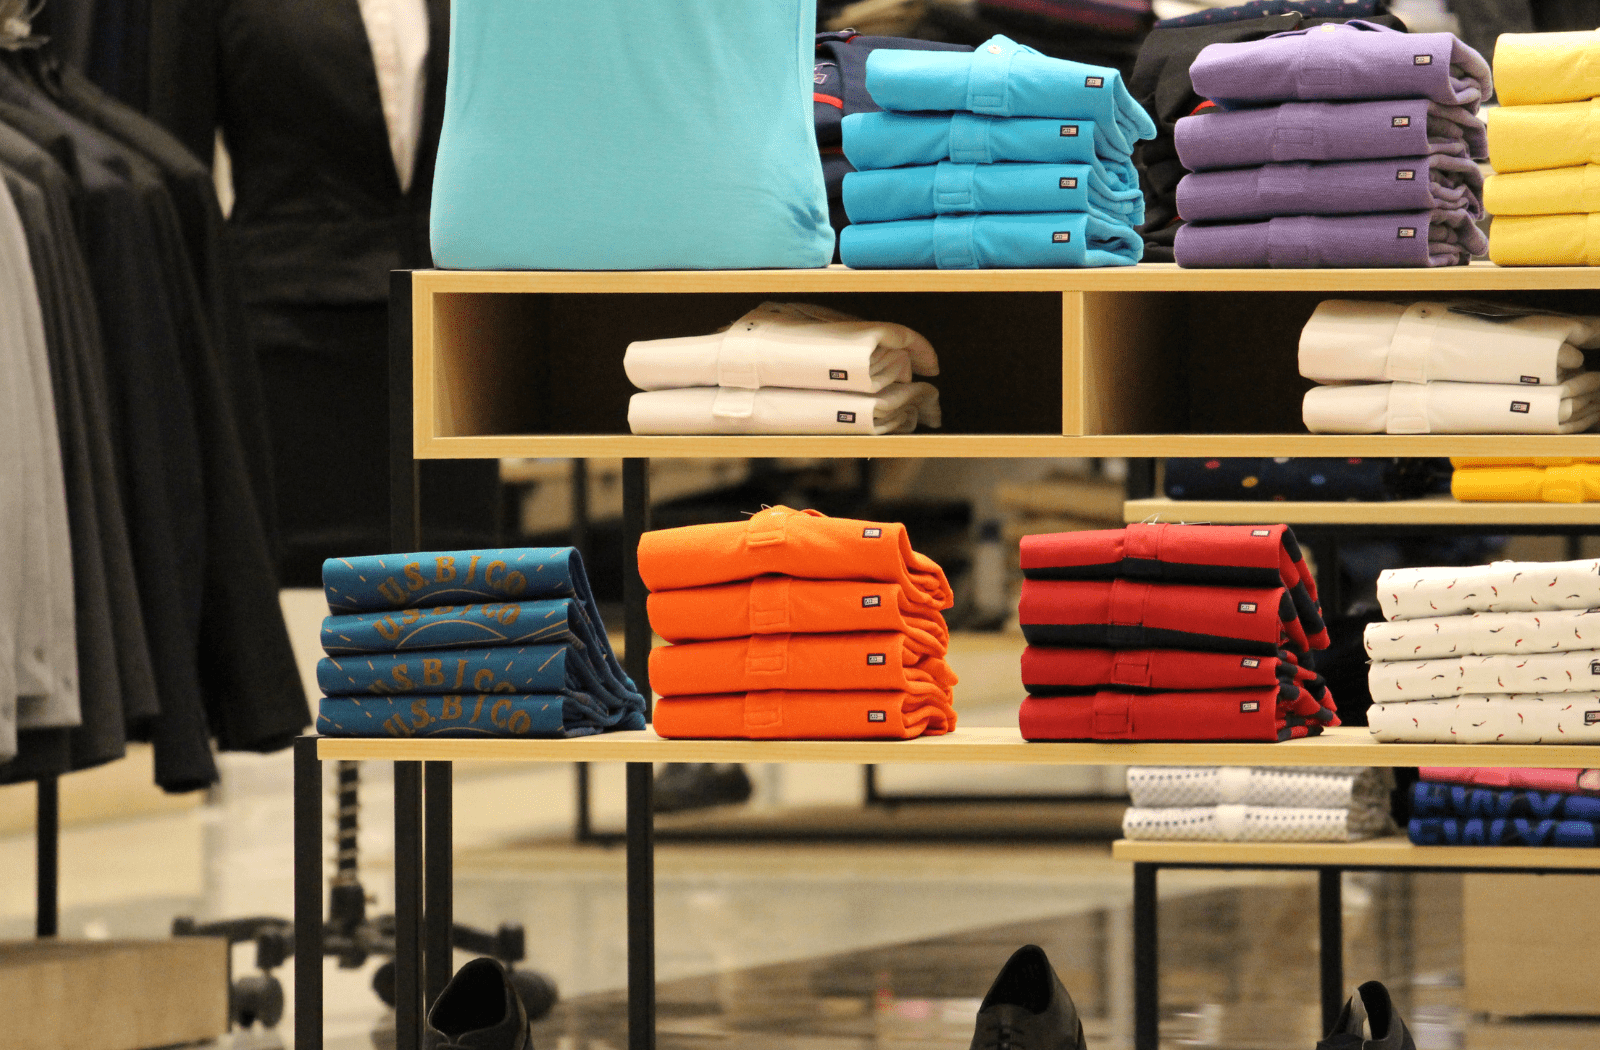 cloth departmental store like Nordstrom Rack